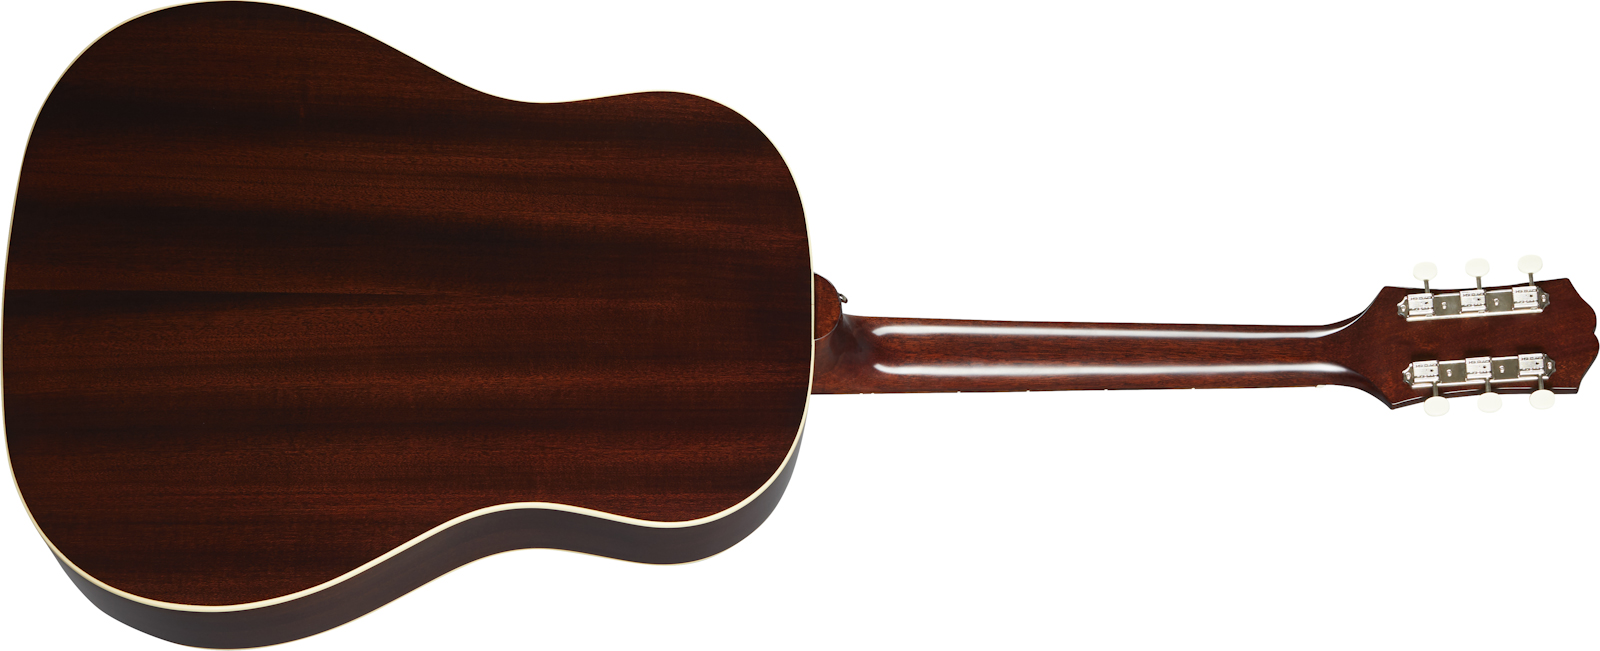 Epiphone J-45 Inspired By Gibson Dreadnought Epicea Acajou Lau - Aged Vintage Sunburst - Elektroakustische Gitarre - Variation 1